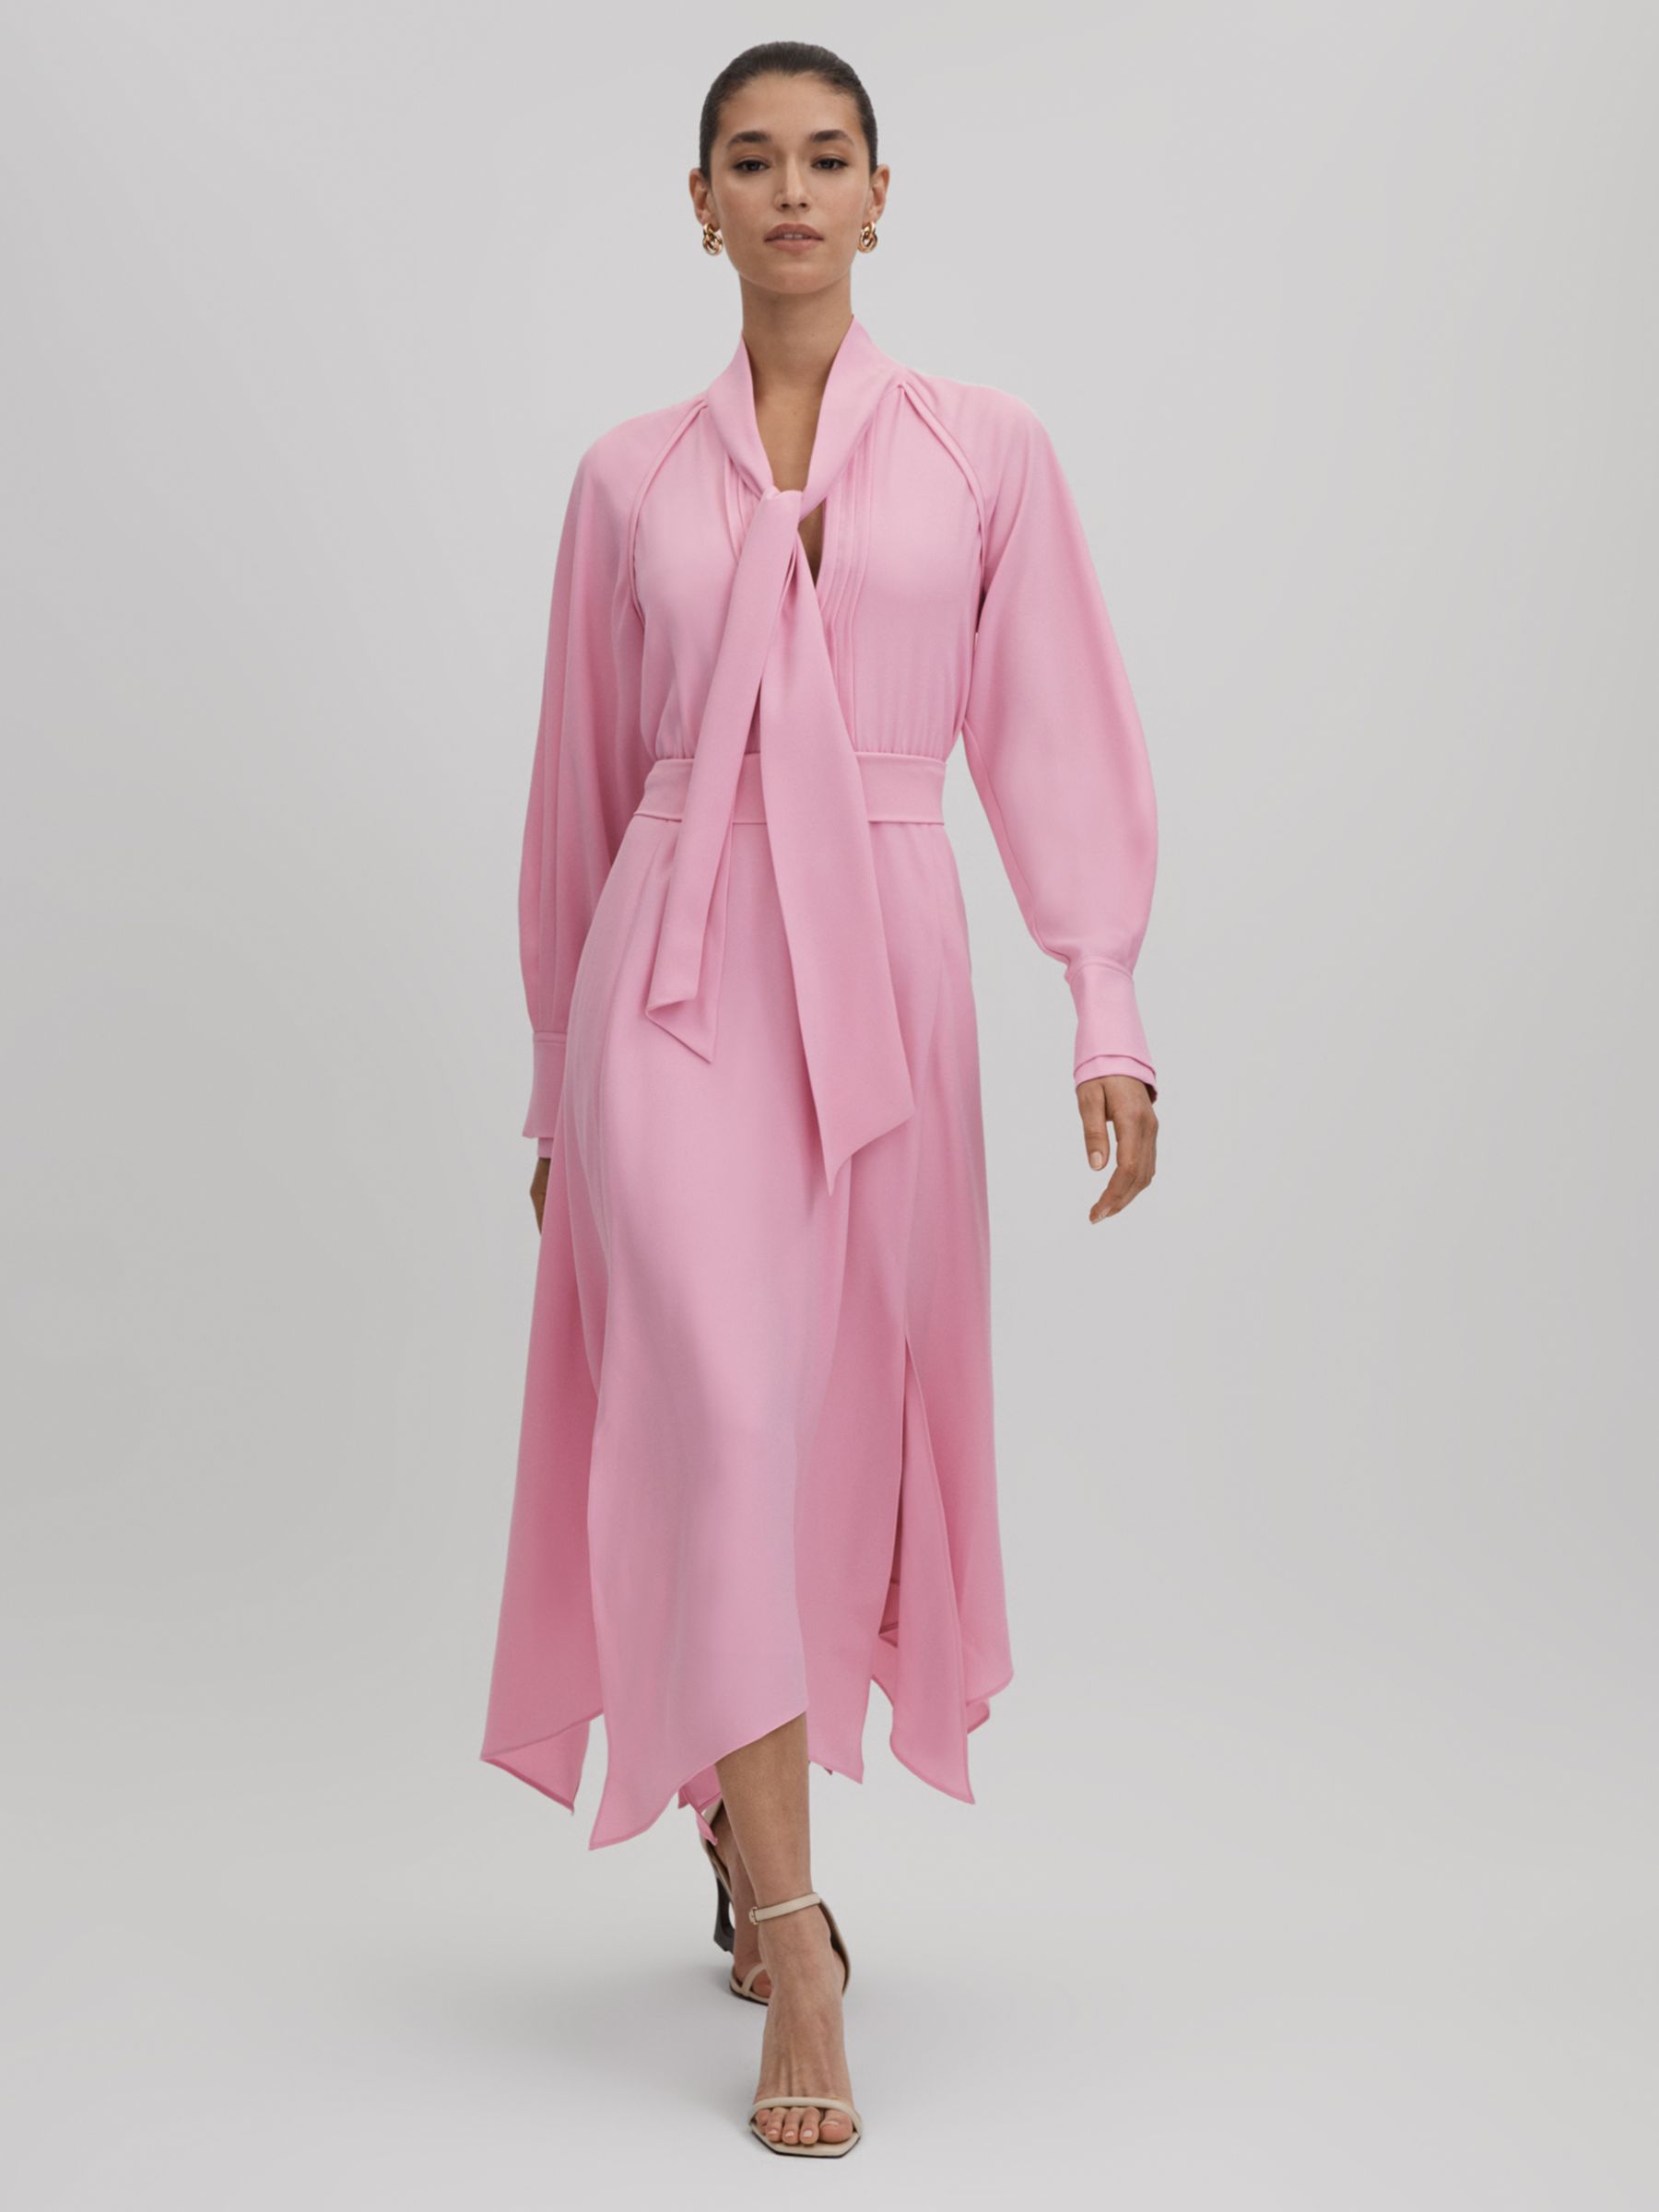 Reiss Erica Tie Neck Belted Midi Dress, Pink, 6